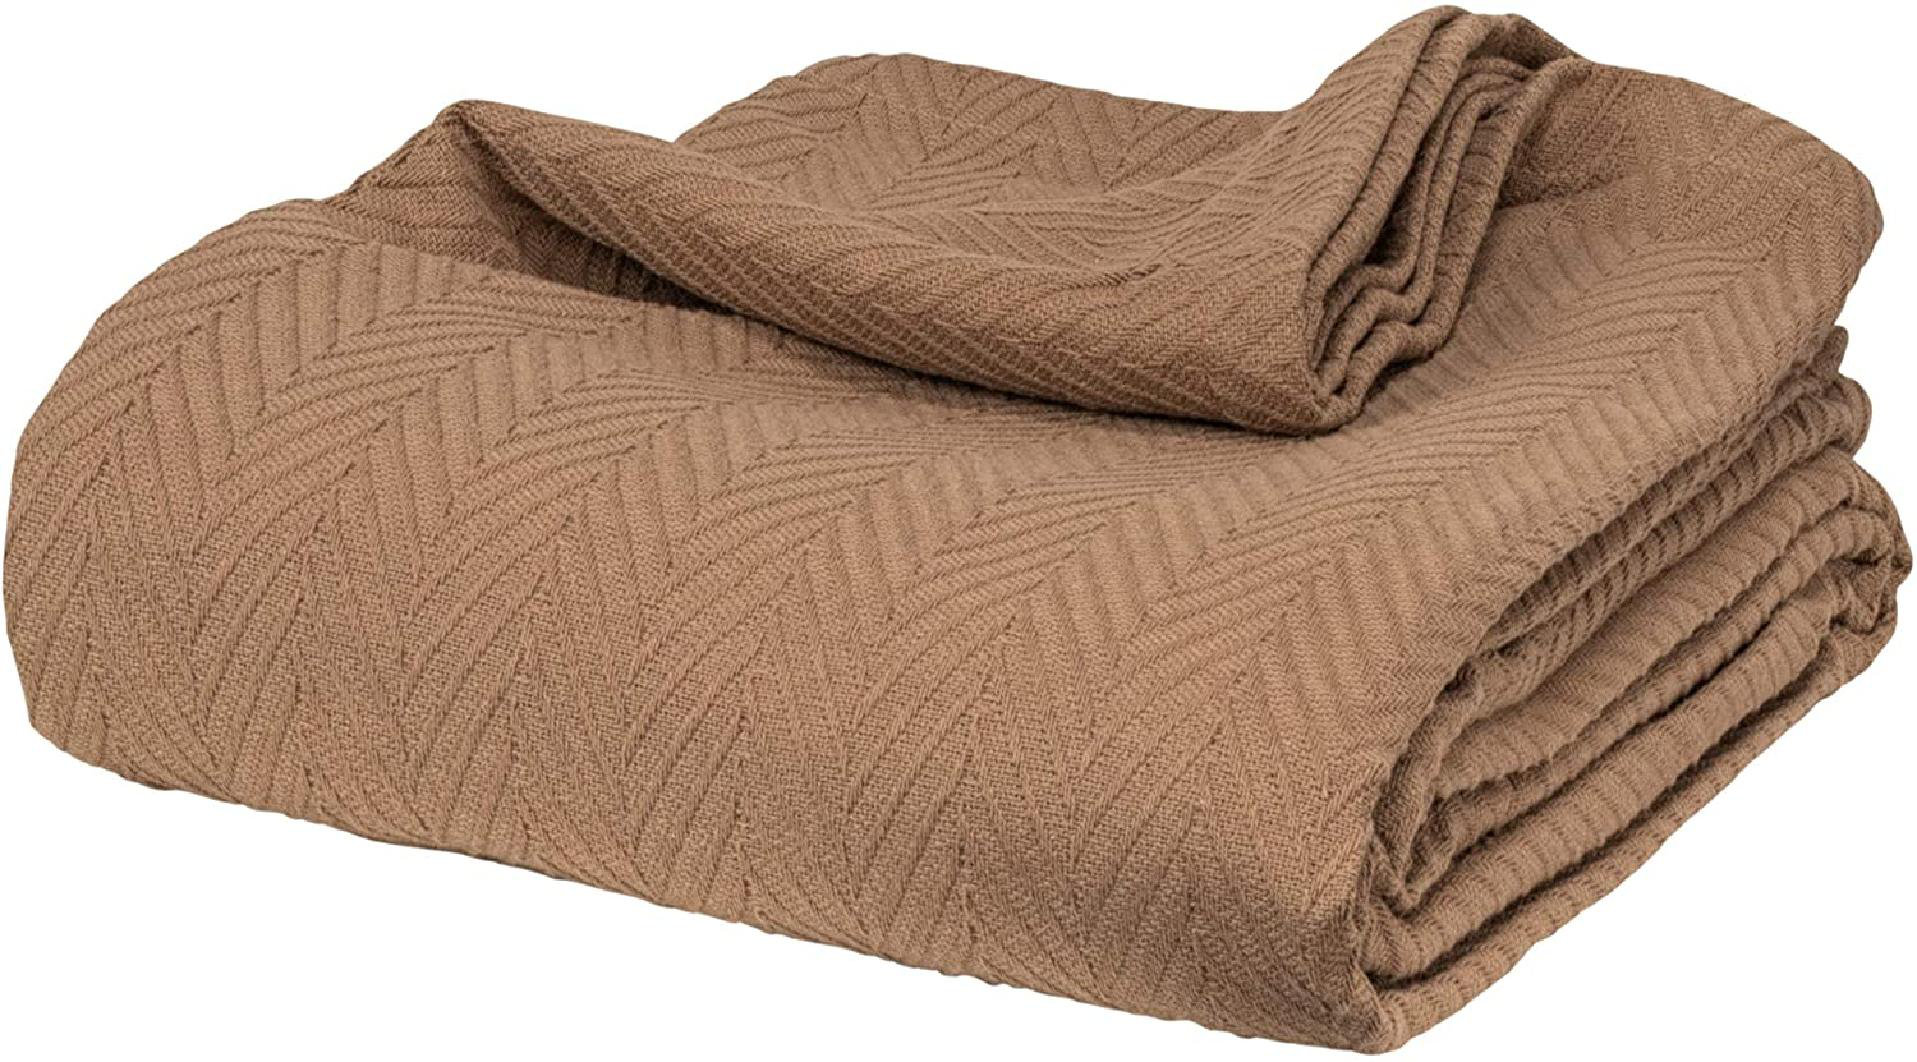 Charcoal Blanket Full Size,Layering Blanket,Cotton Thermal Blanket King,Farmhouse Blanket,Soft Cotton Blanket,Light Weight Blanket All Season Cotton Thermal Blanket in Twill Weave 102x90 inch 